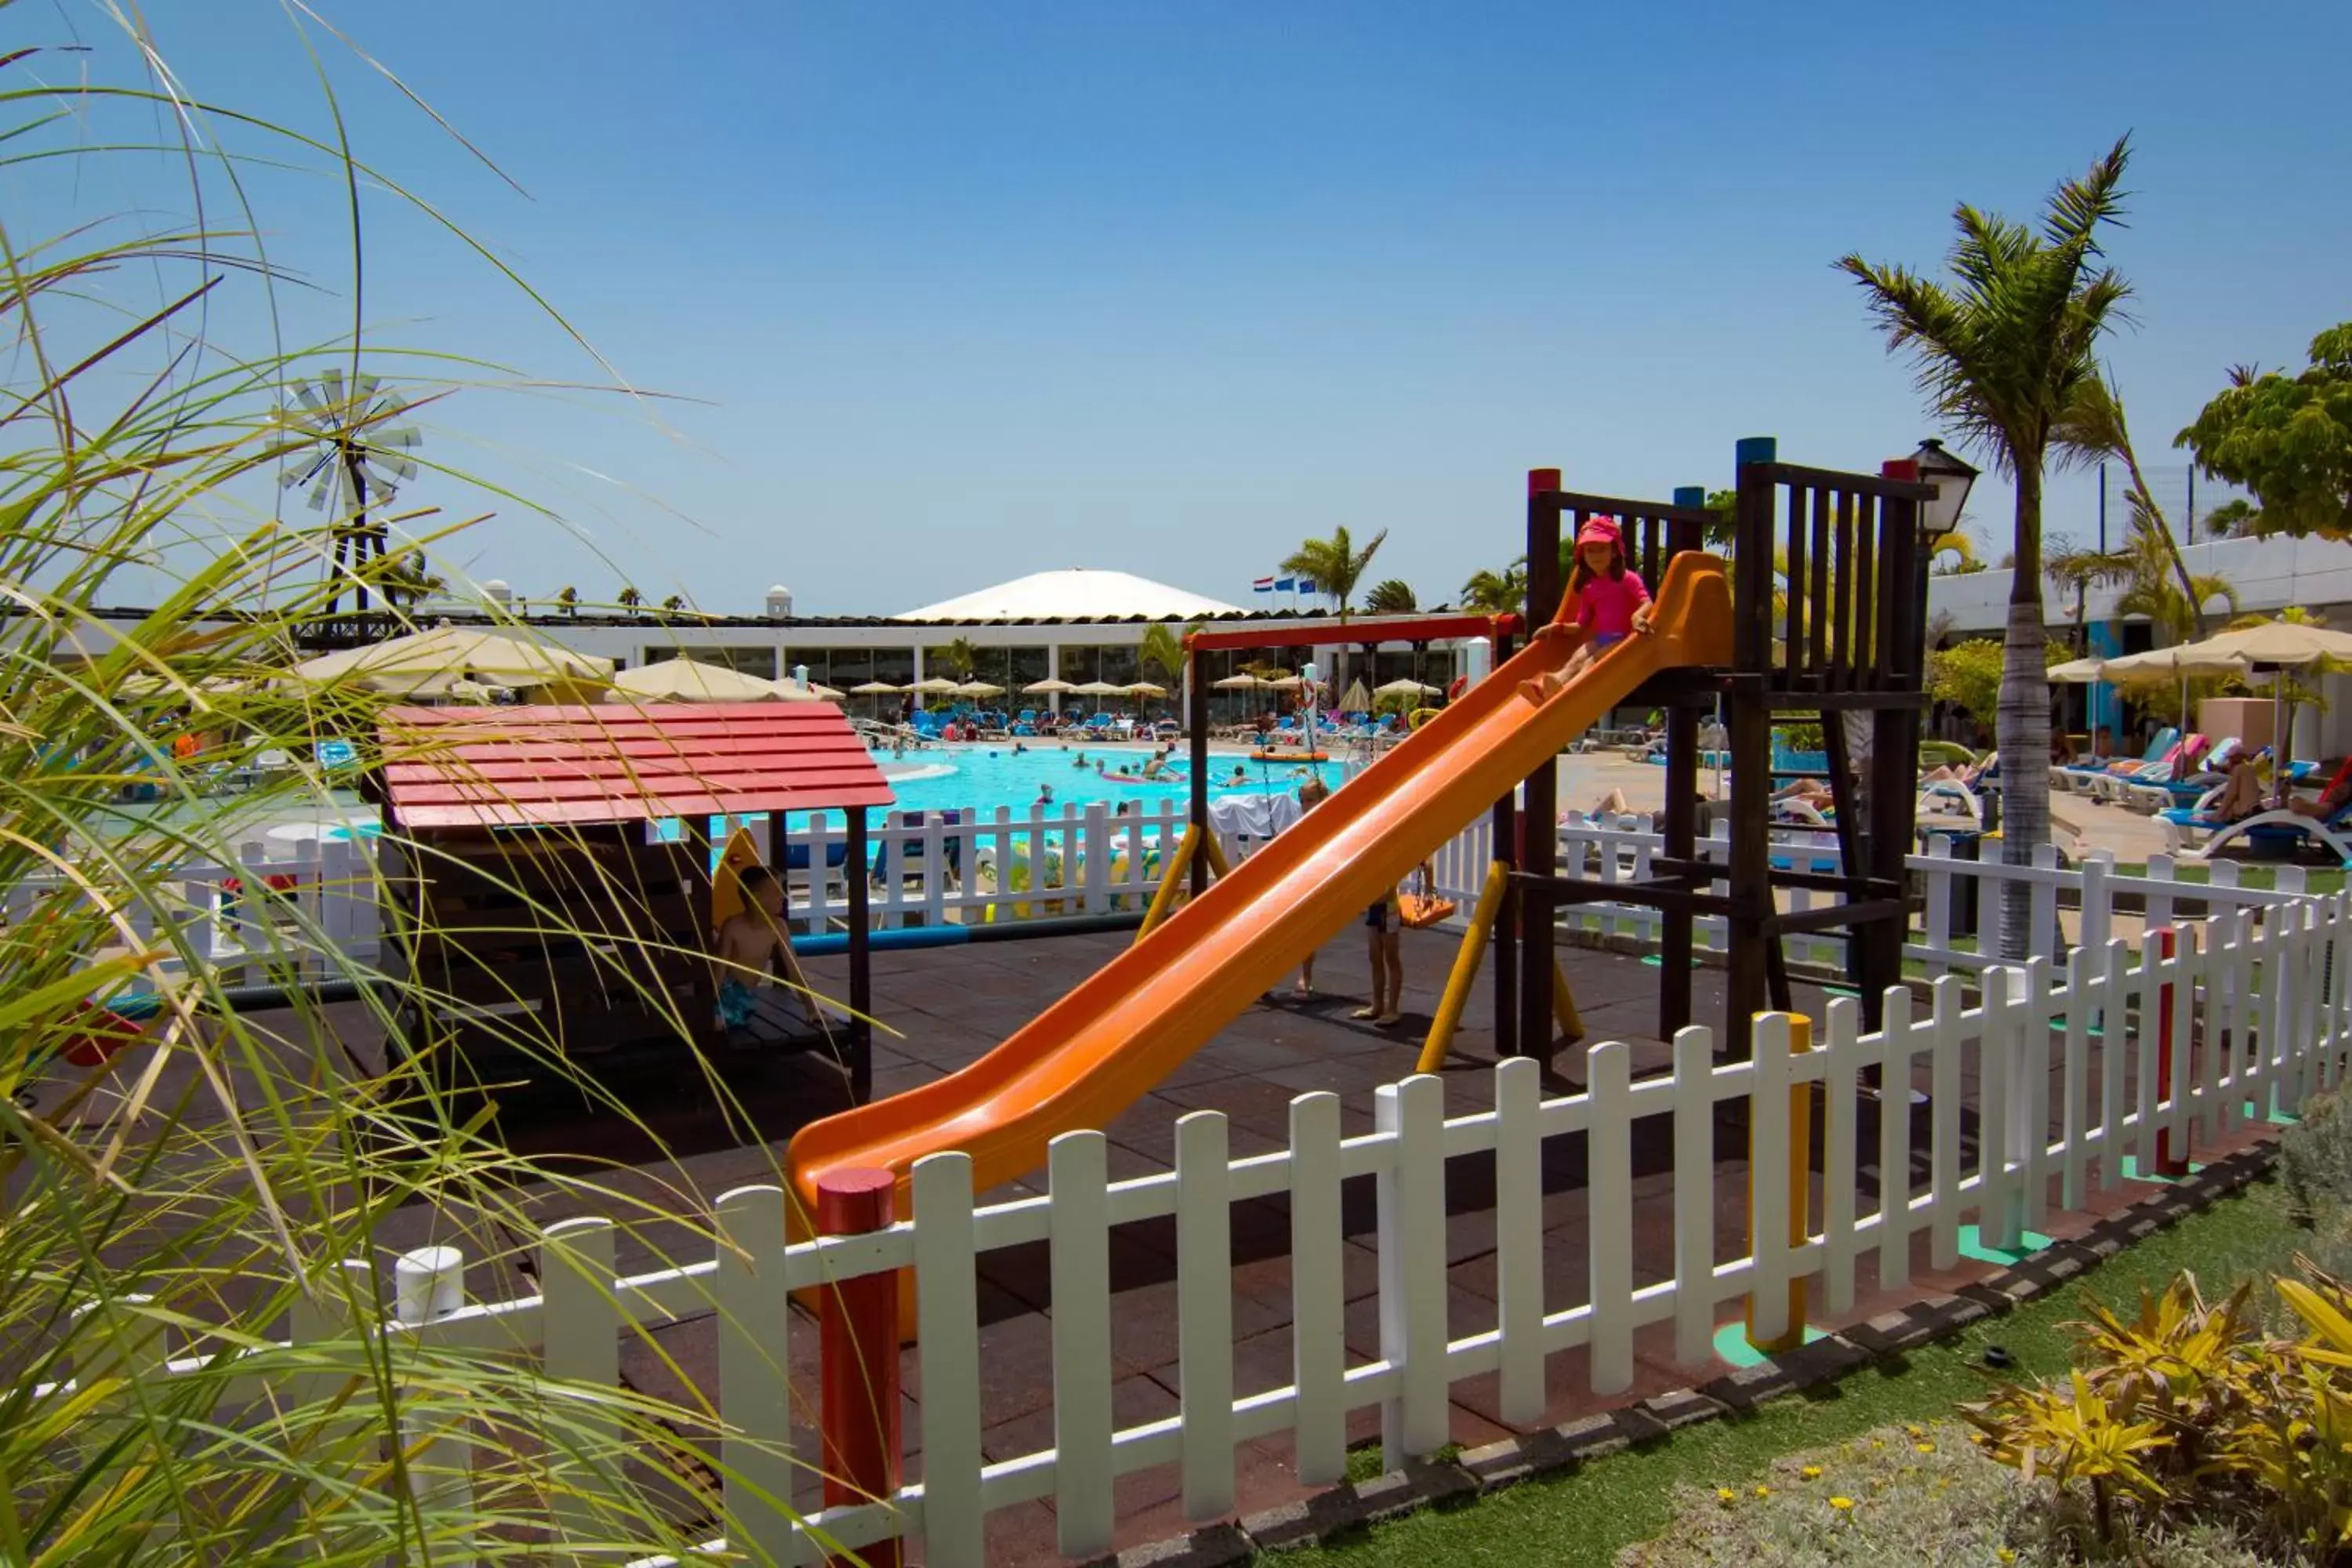 Children play ground, Children's Play Area in Relaxia Lanzasur Club - Aqualava Water Park